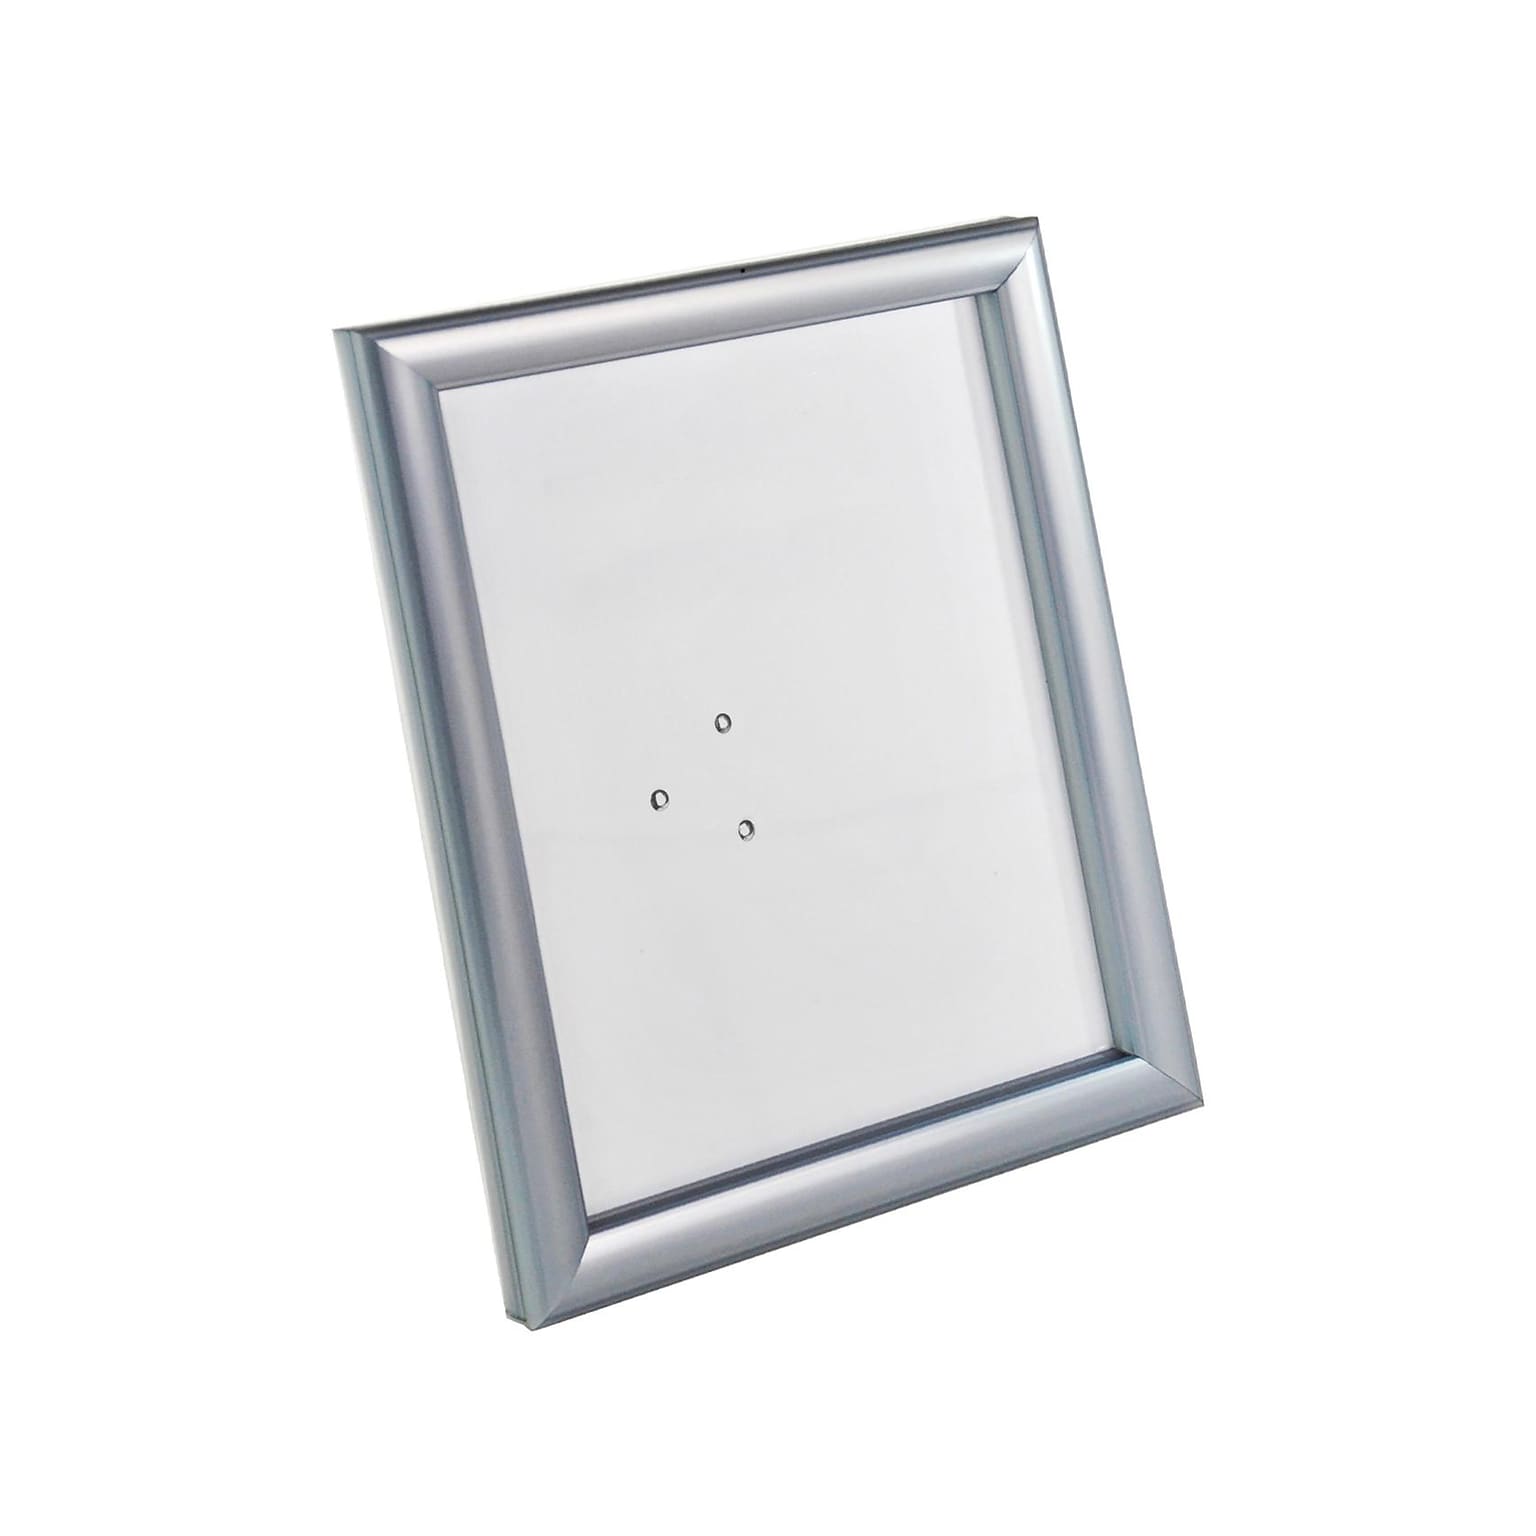 Azar Counter Snap Sign Holder, 8.5 x 11, Silver Plastic Frame, 4/Pack (300332-SLV-4PK)